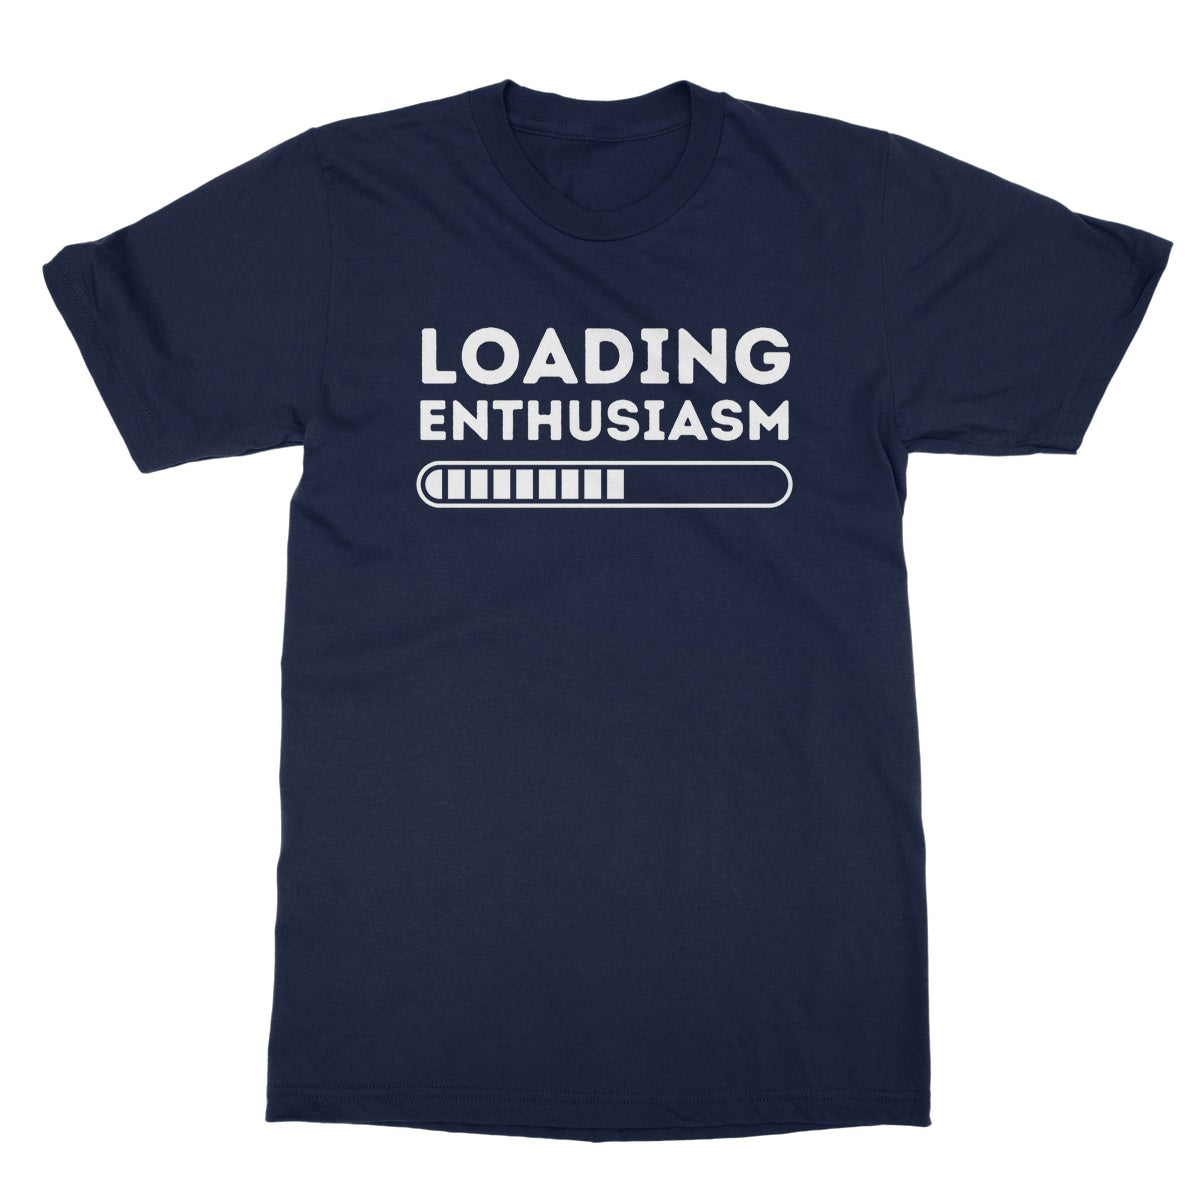 loading enthusiasm t shirt navy